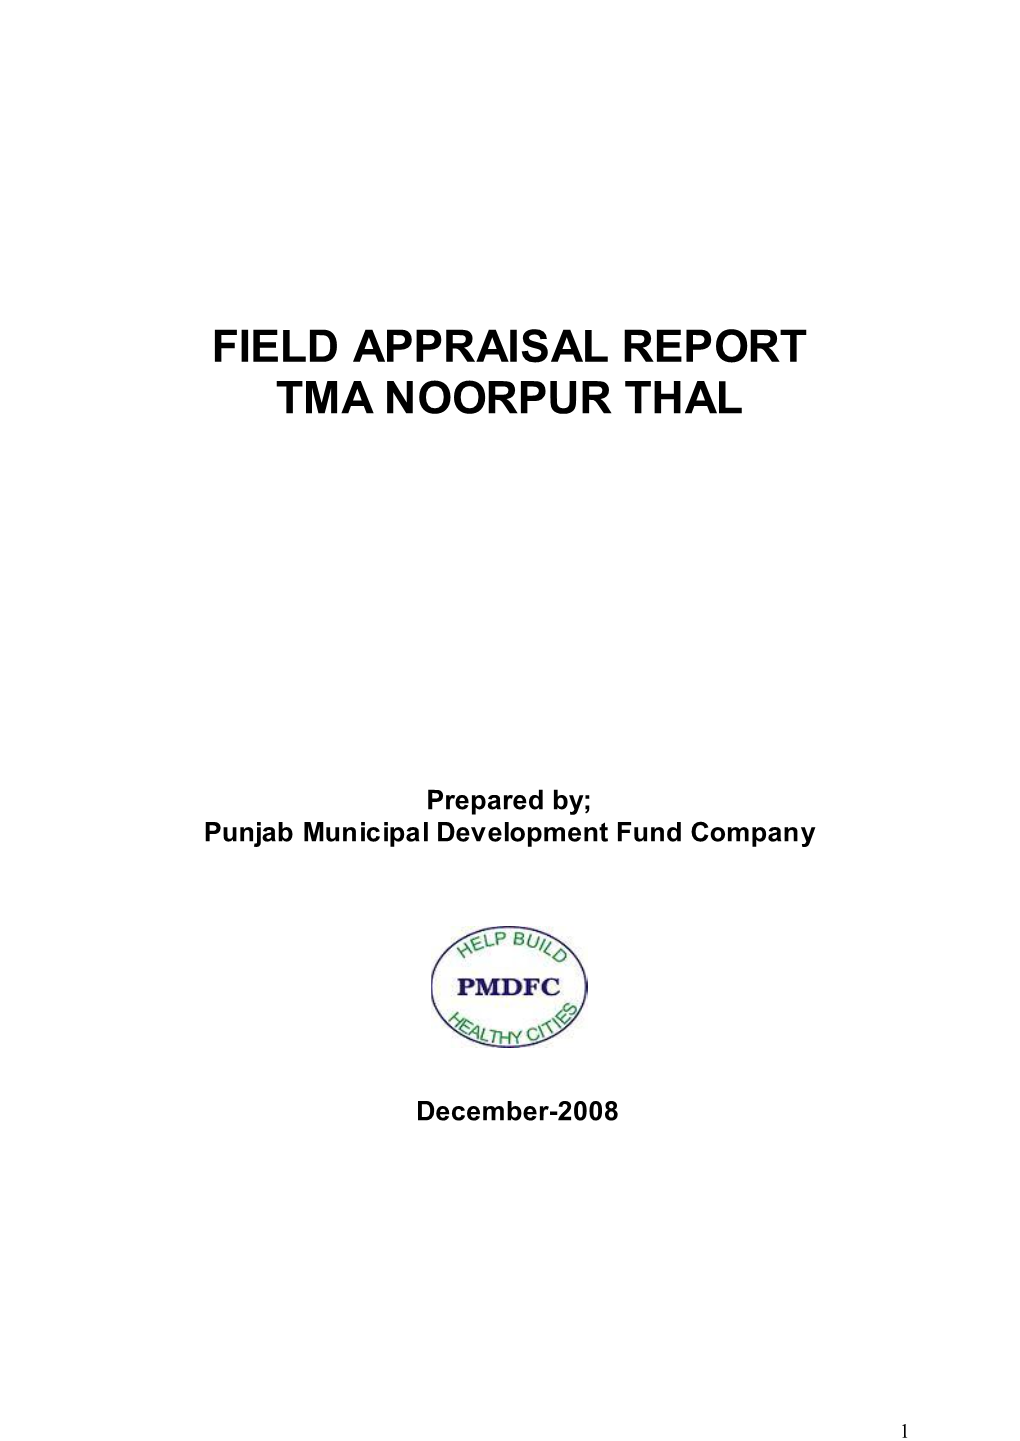 Field Appraisal Report Tma Noorpur Thal